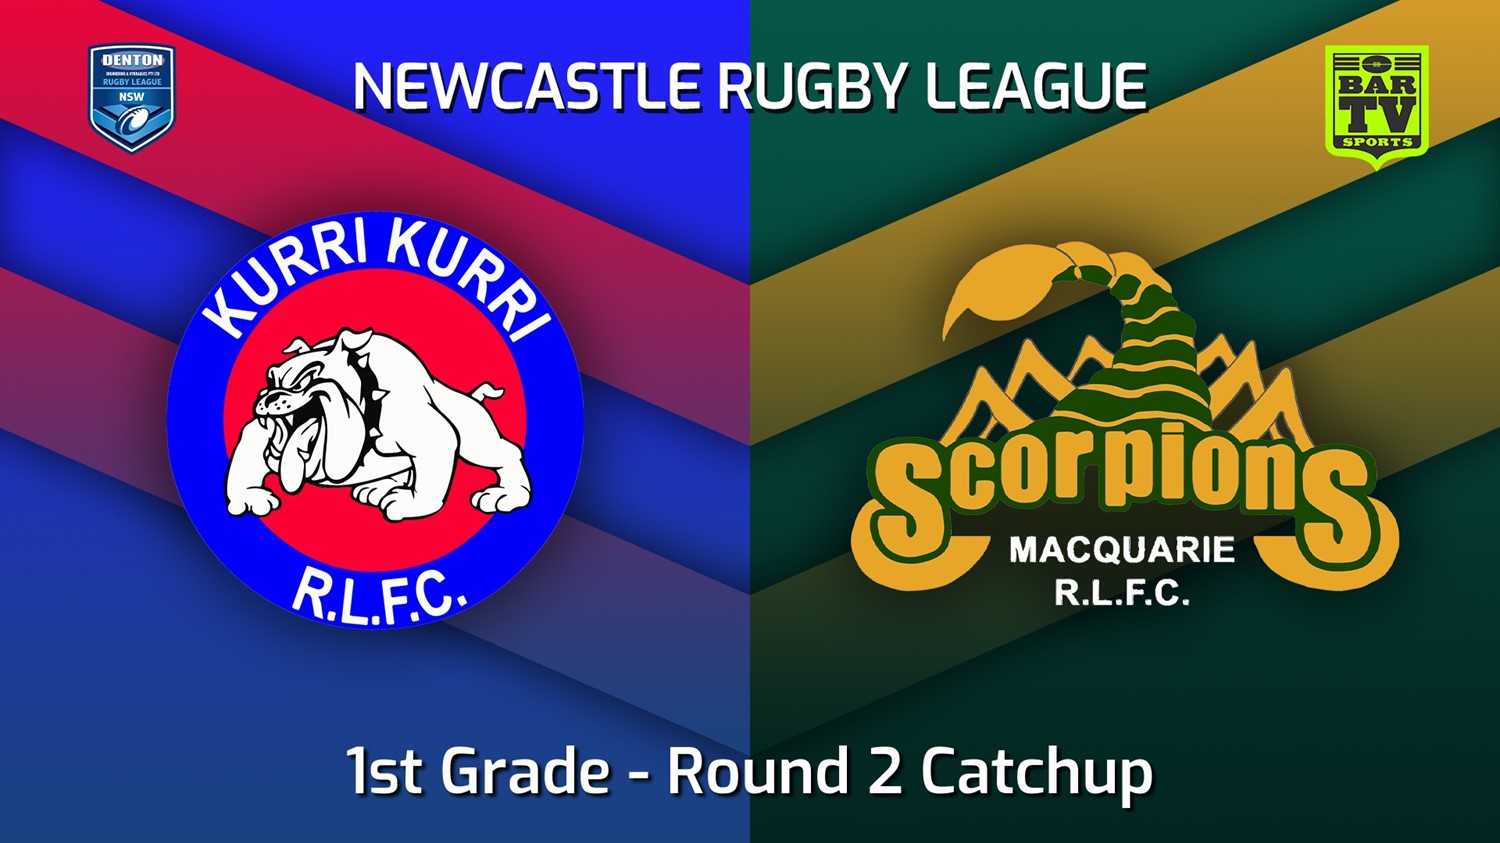 220515-Newcastle Round 2 Catchup - 1st Grade - Kurri Kurri Bulldogs v Macquarie Scorpions Minigame Slate Image